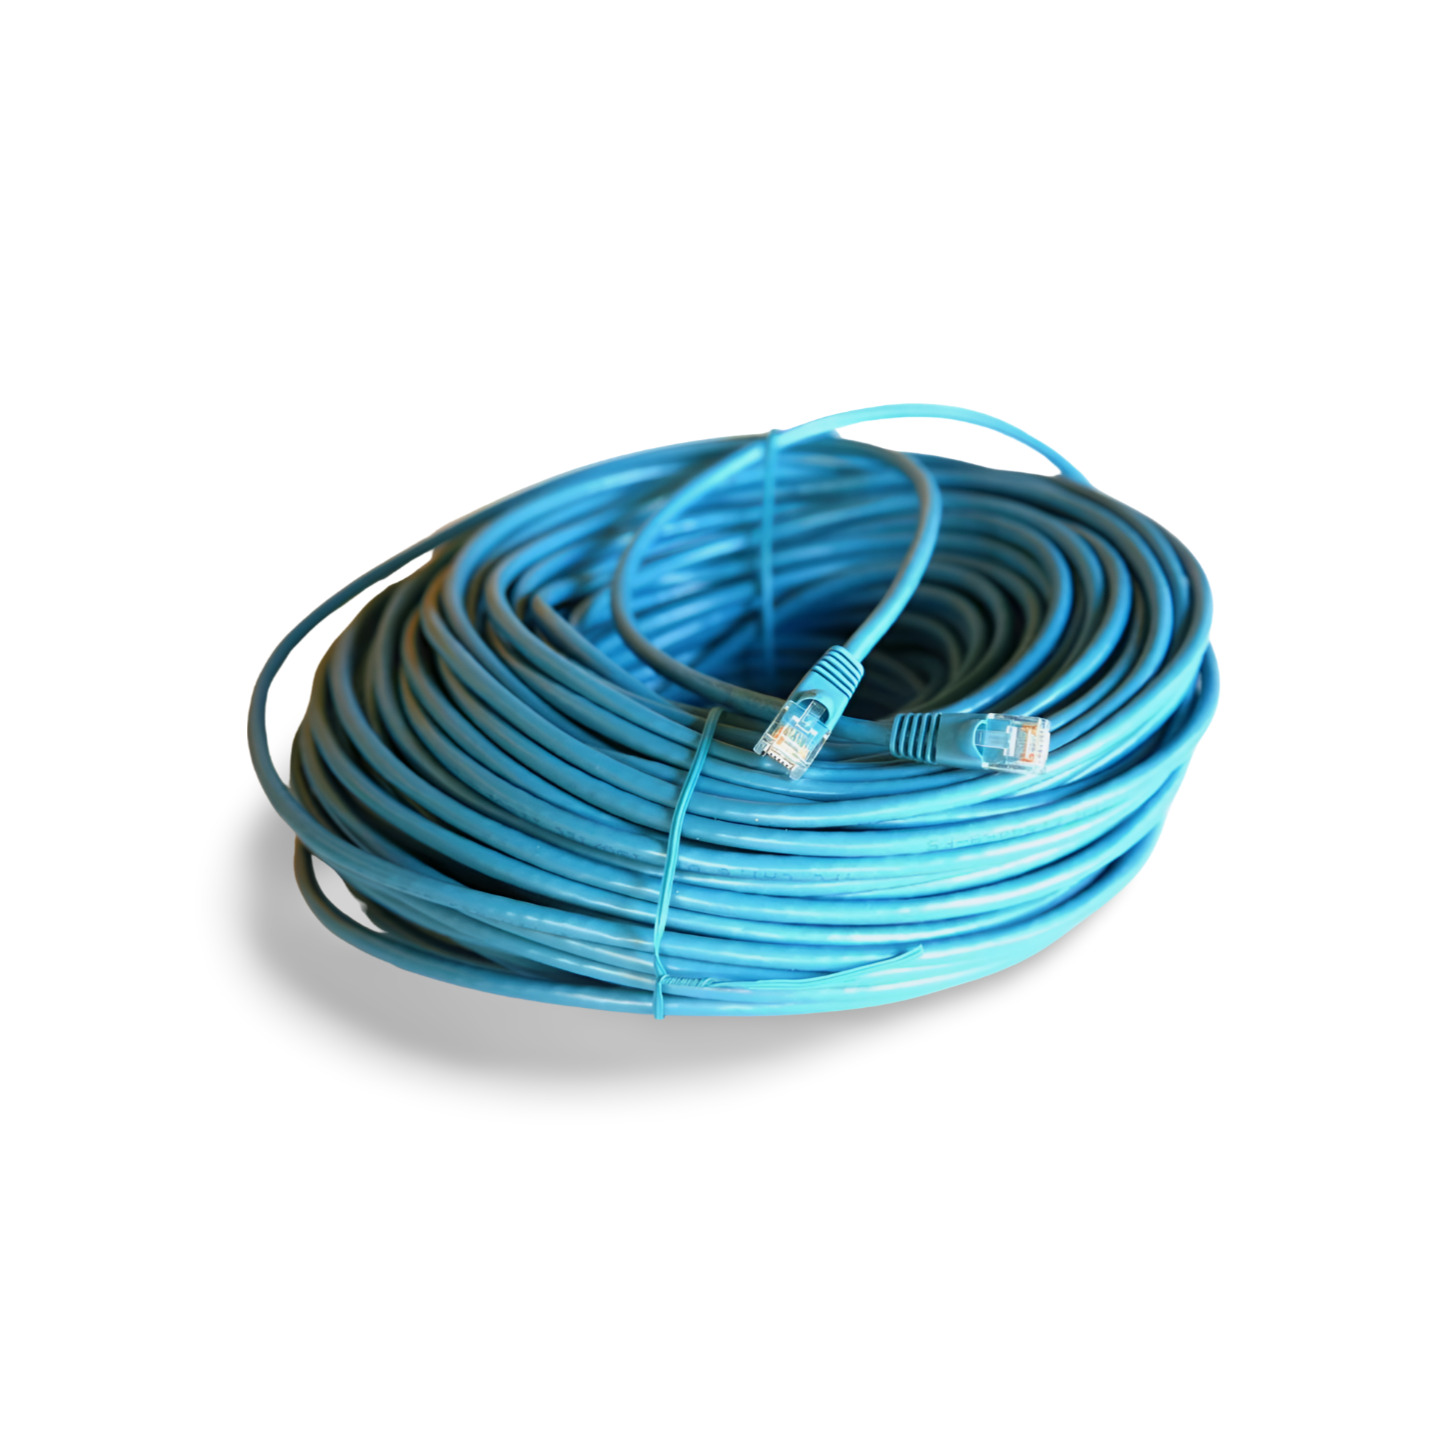 175ft Cat6 Ethernet Network Cable RJ45 - Blue